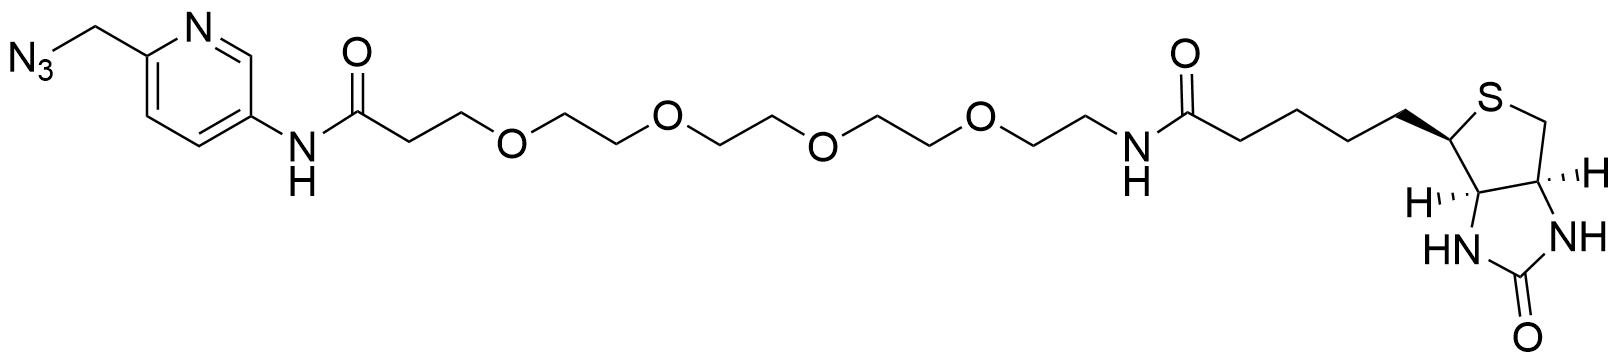 Biotin Picolyl Azide